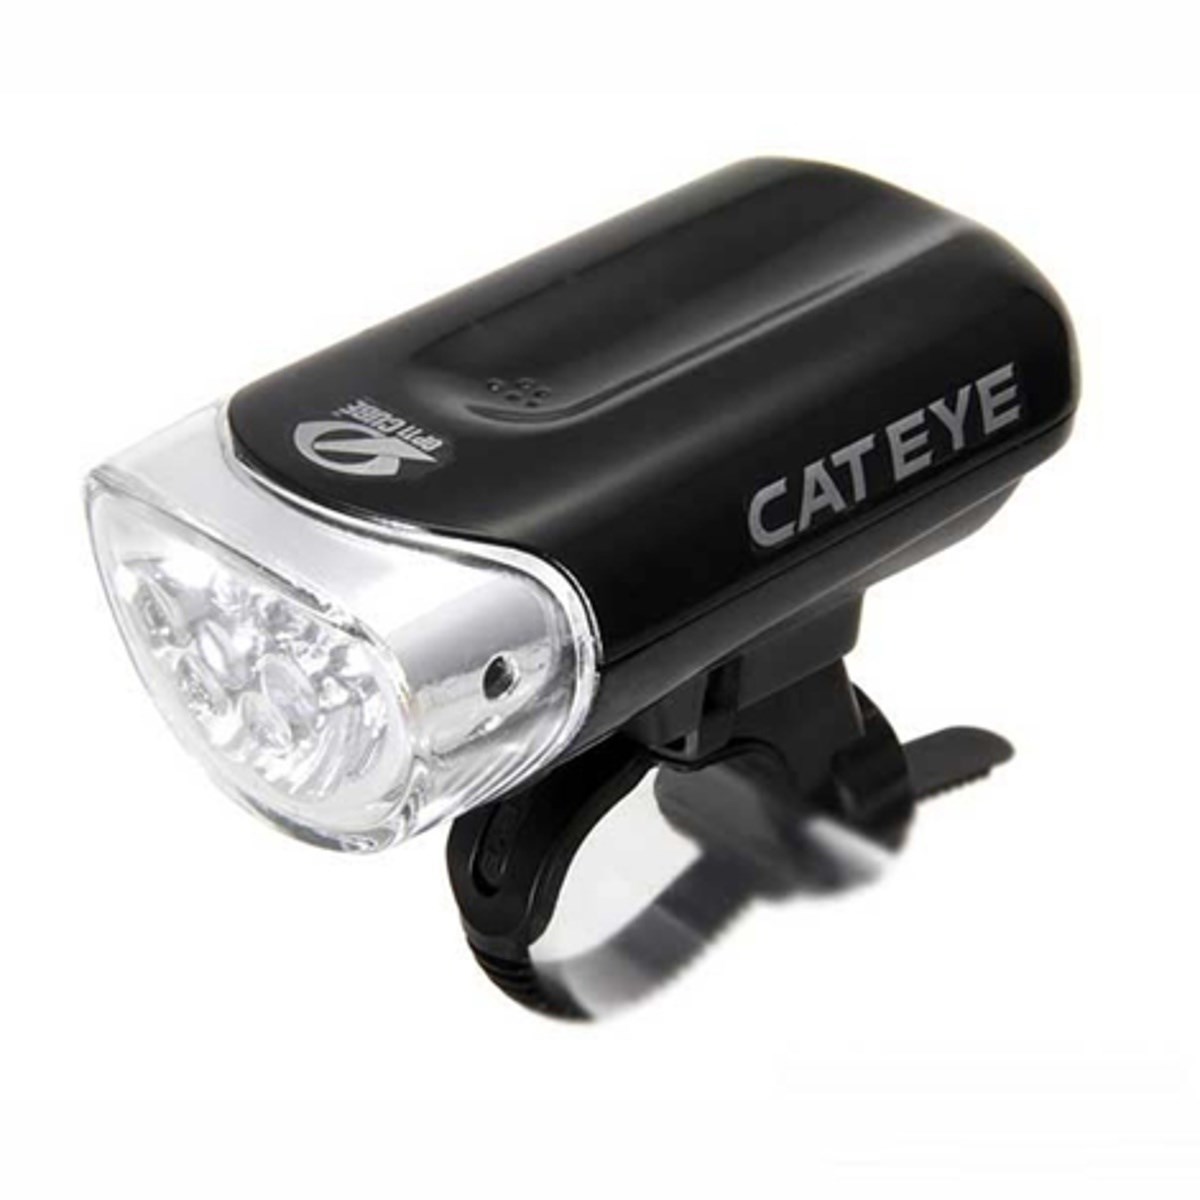 Cateye Jido EL-AU230 Auto Front Light product image